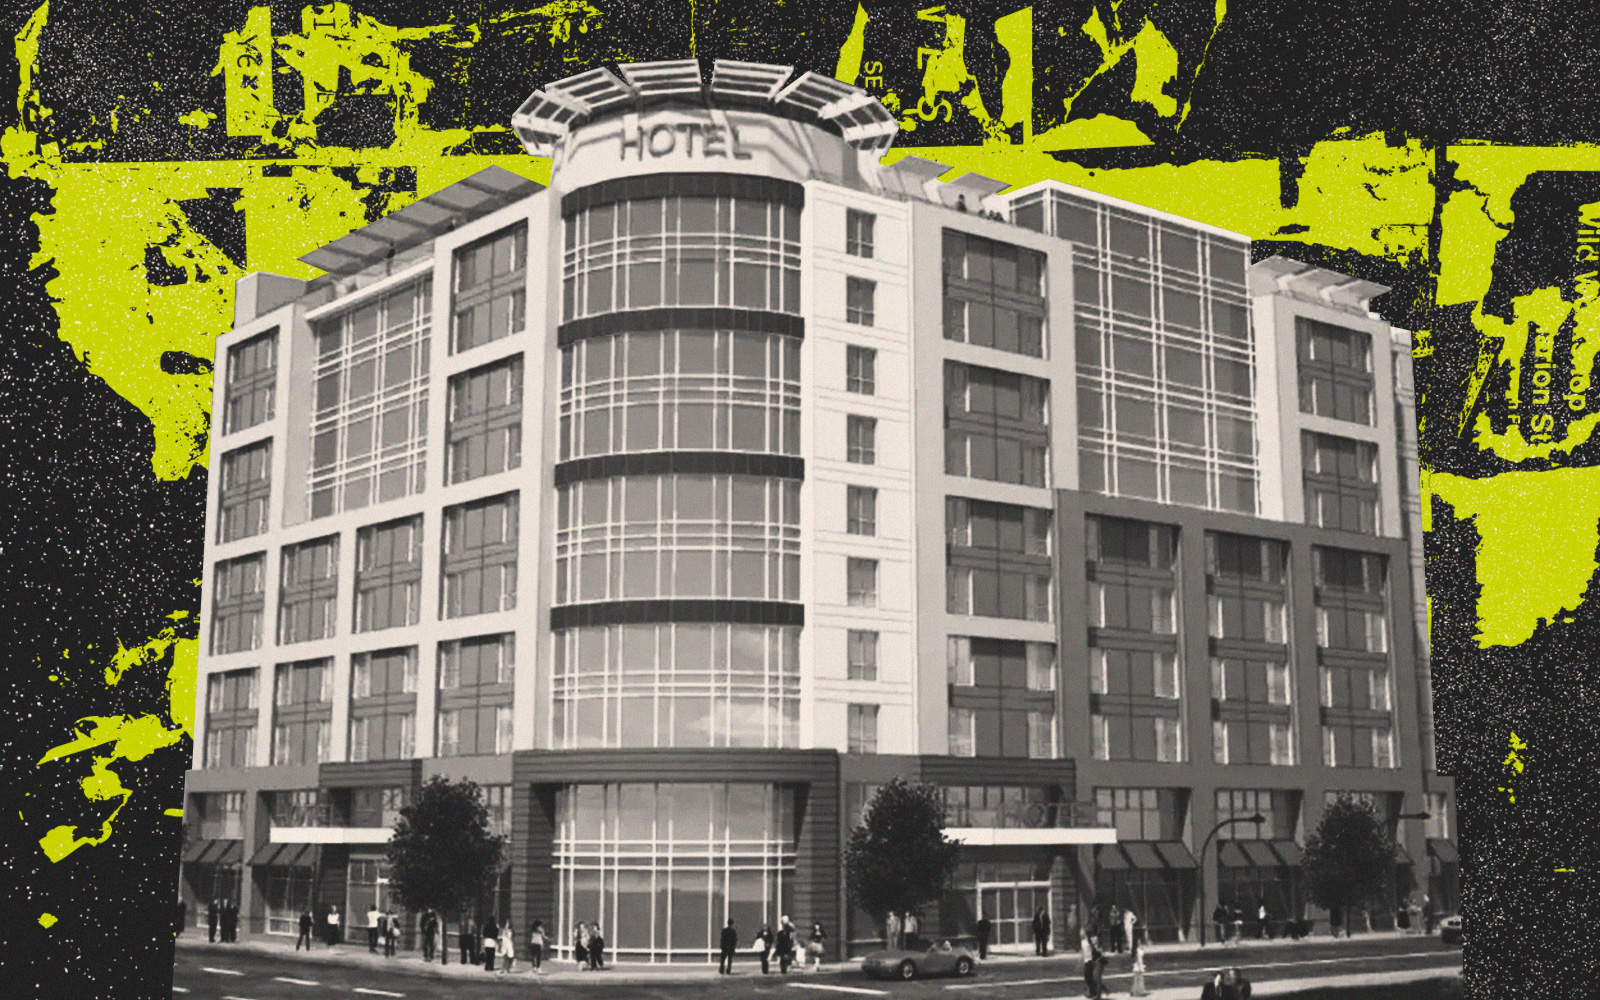 Development site for 170-room San Jose hotel falls into default